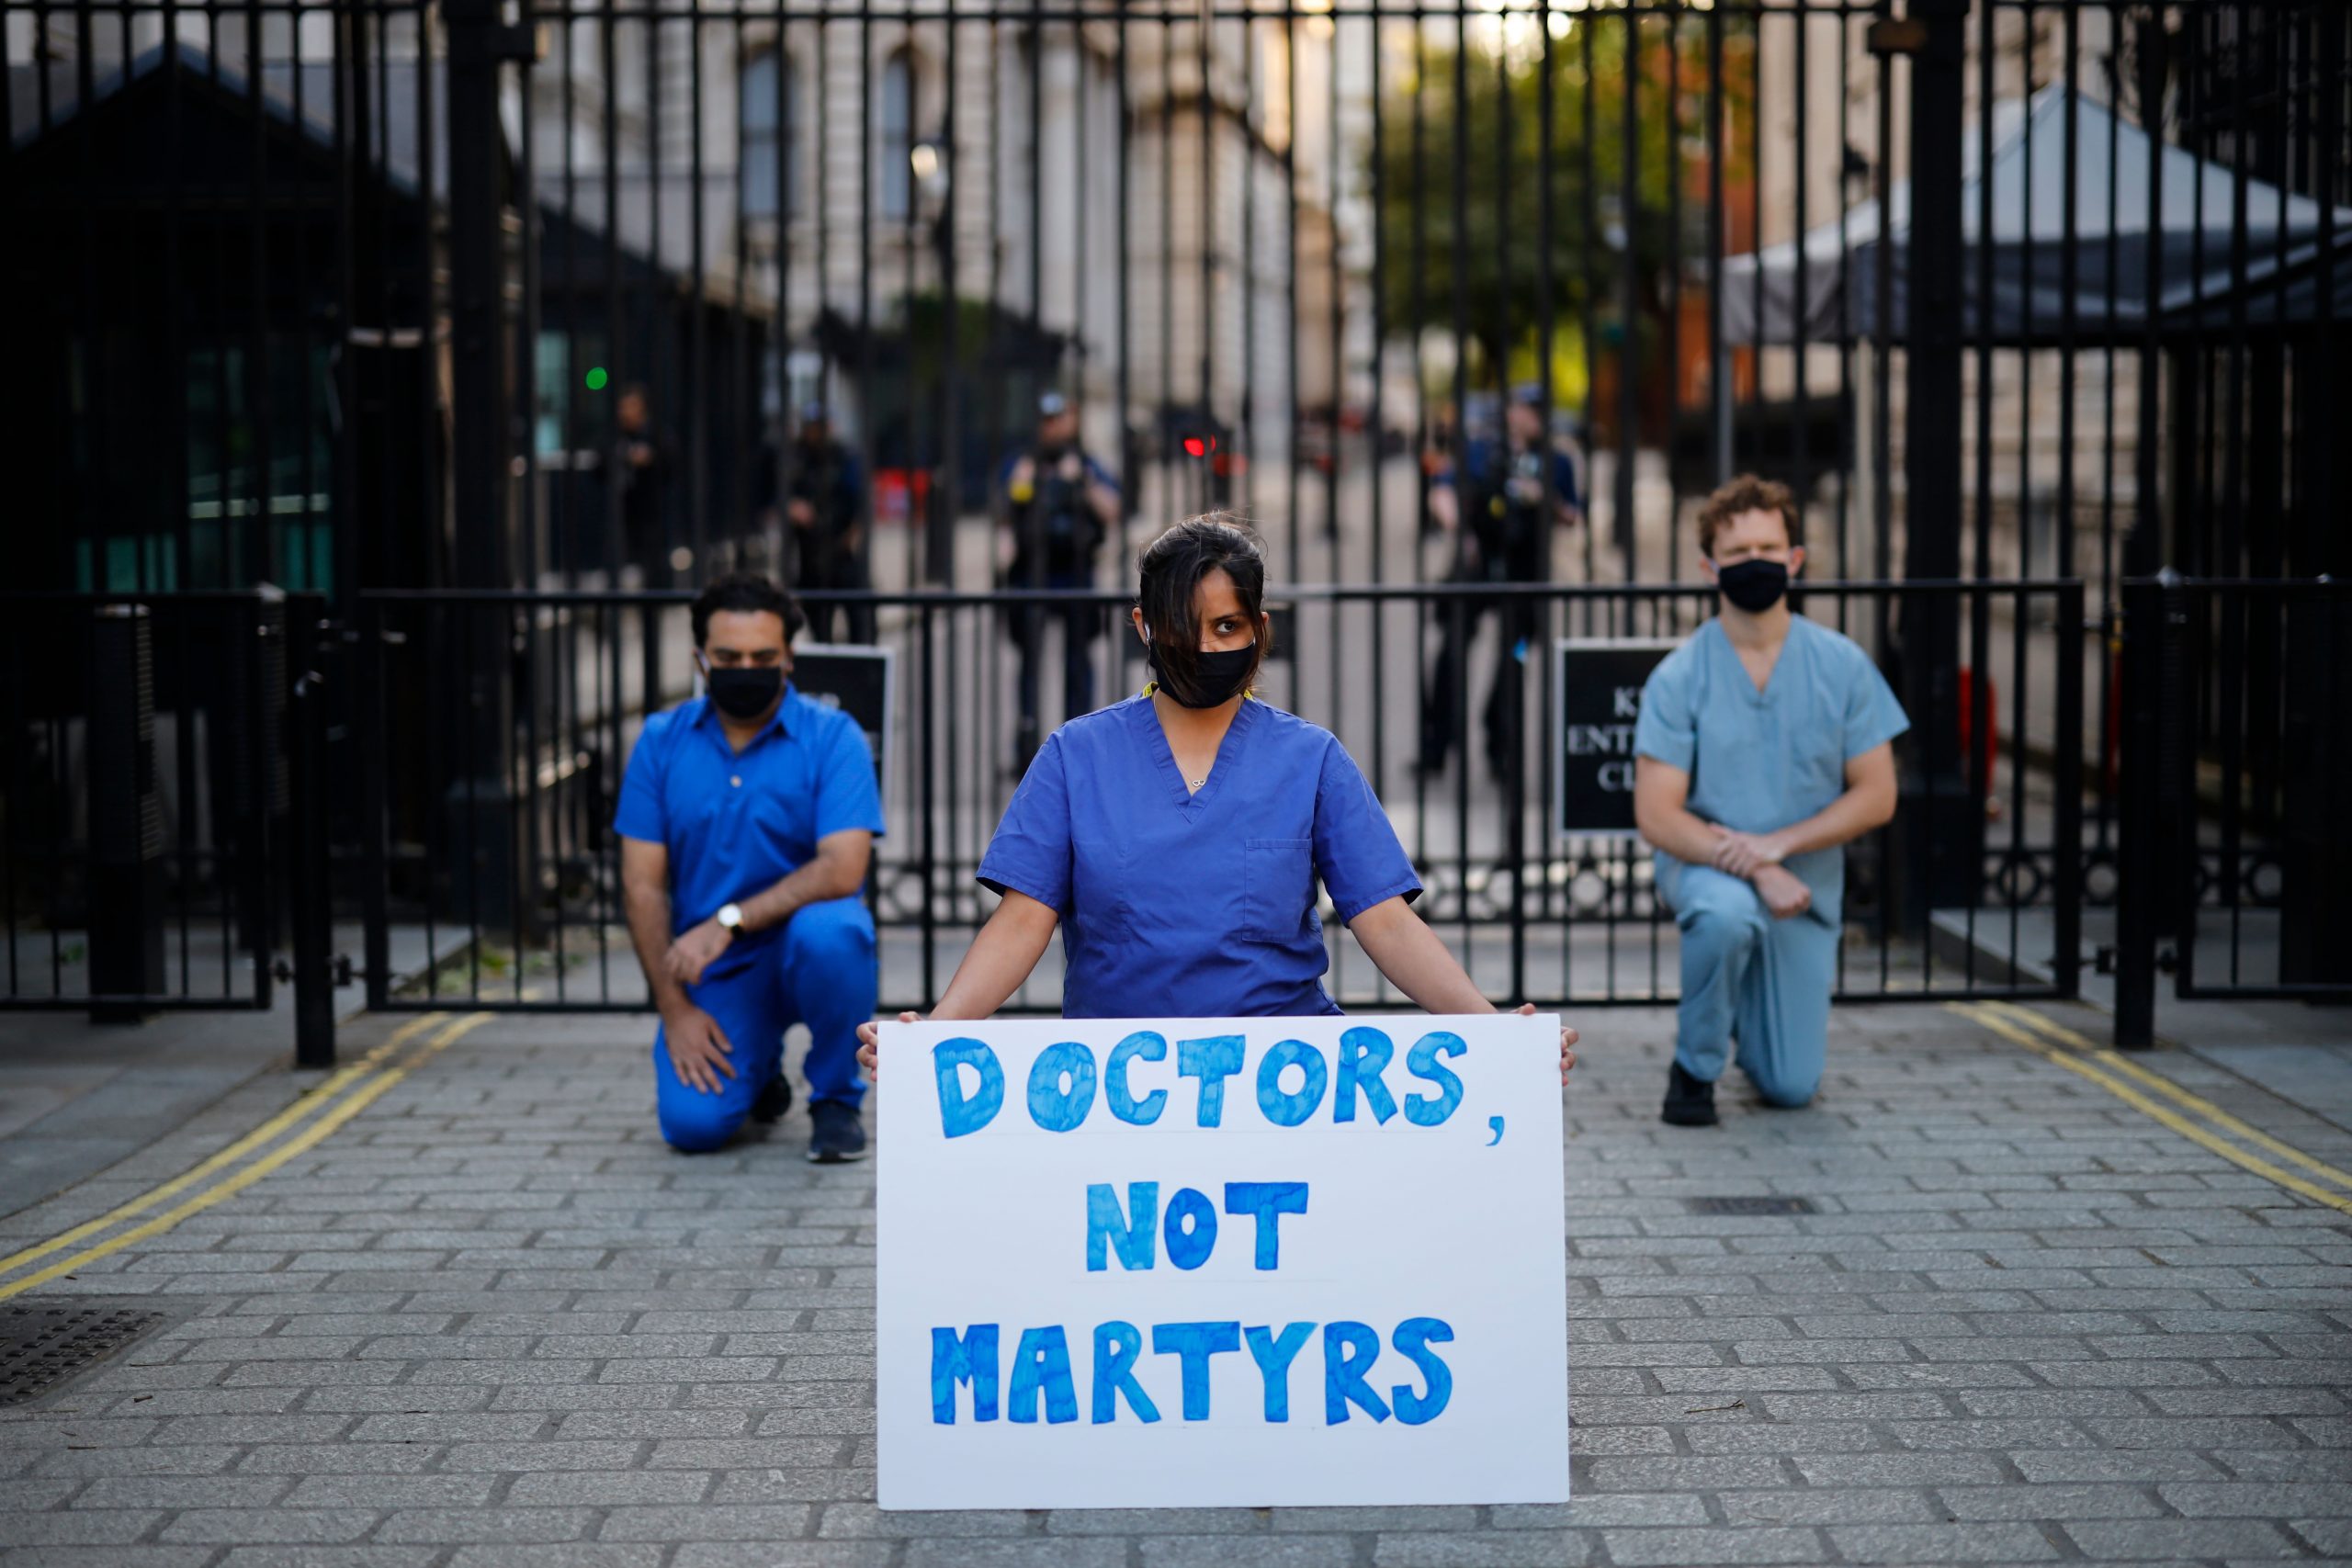 Doctors, Not Martyrs